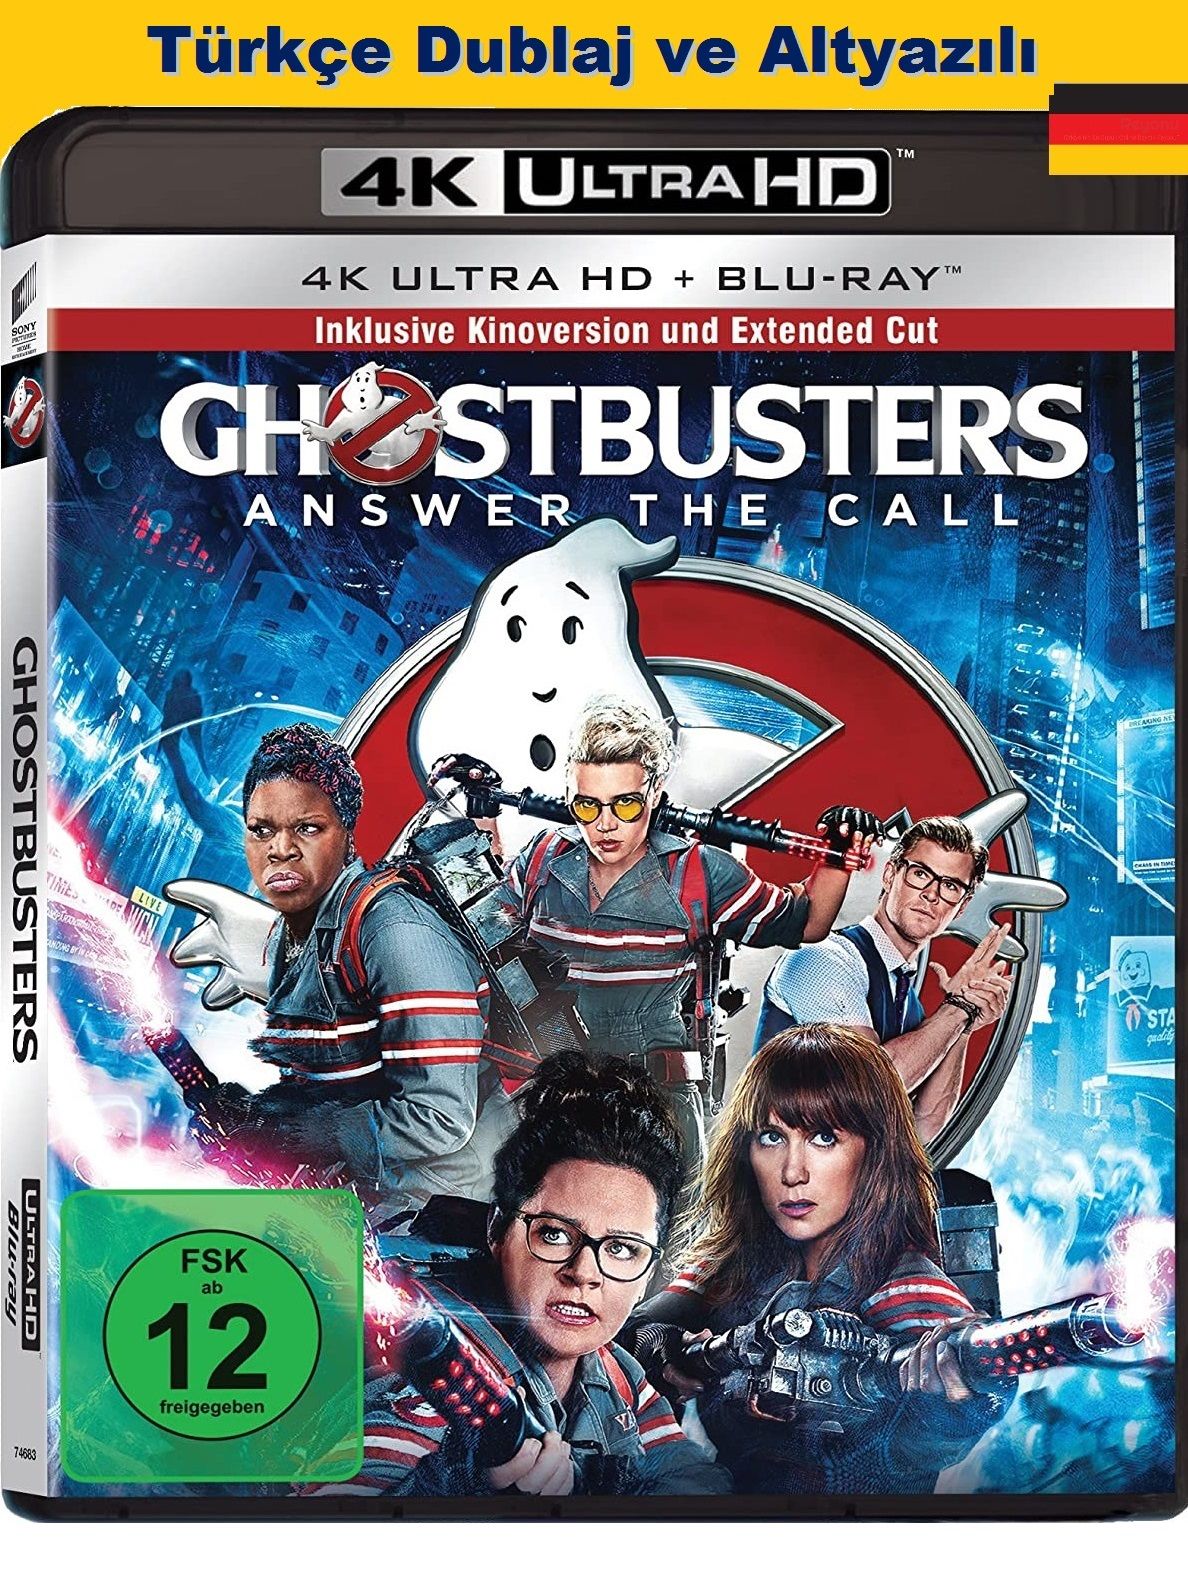 Ghostbusters 2016 - Hayalet Avcıları 2016 4K Ultra HD+Blu-Ray 2 Disk